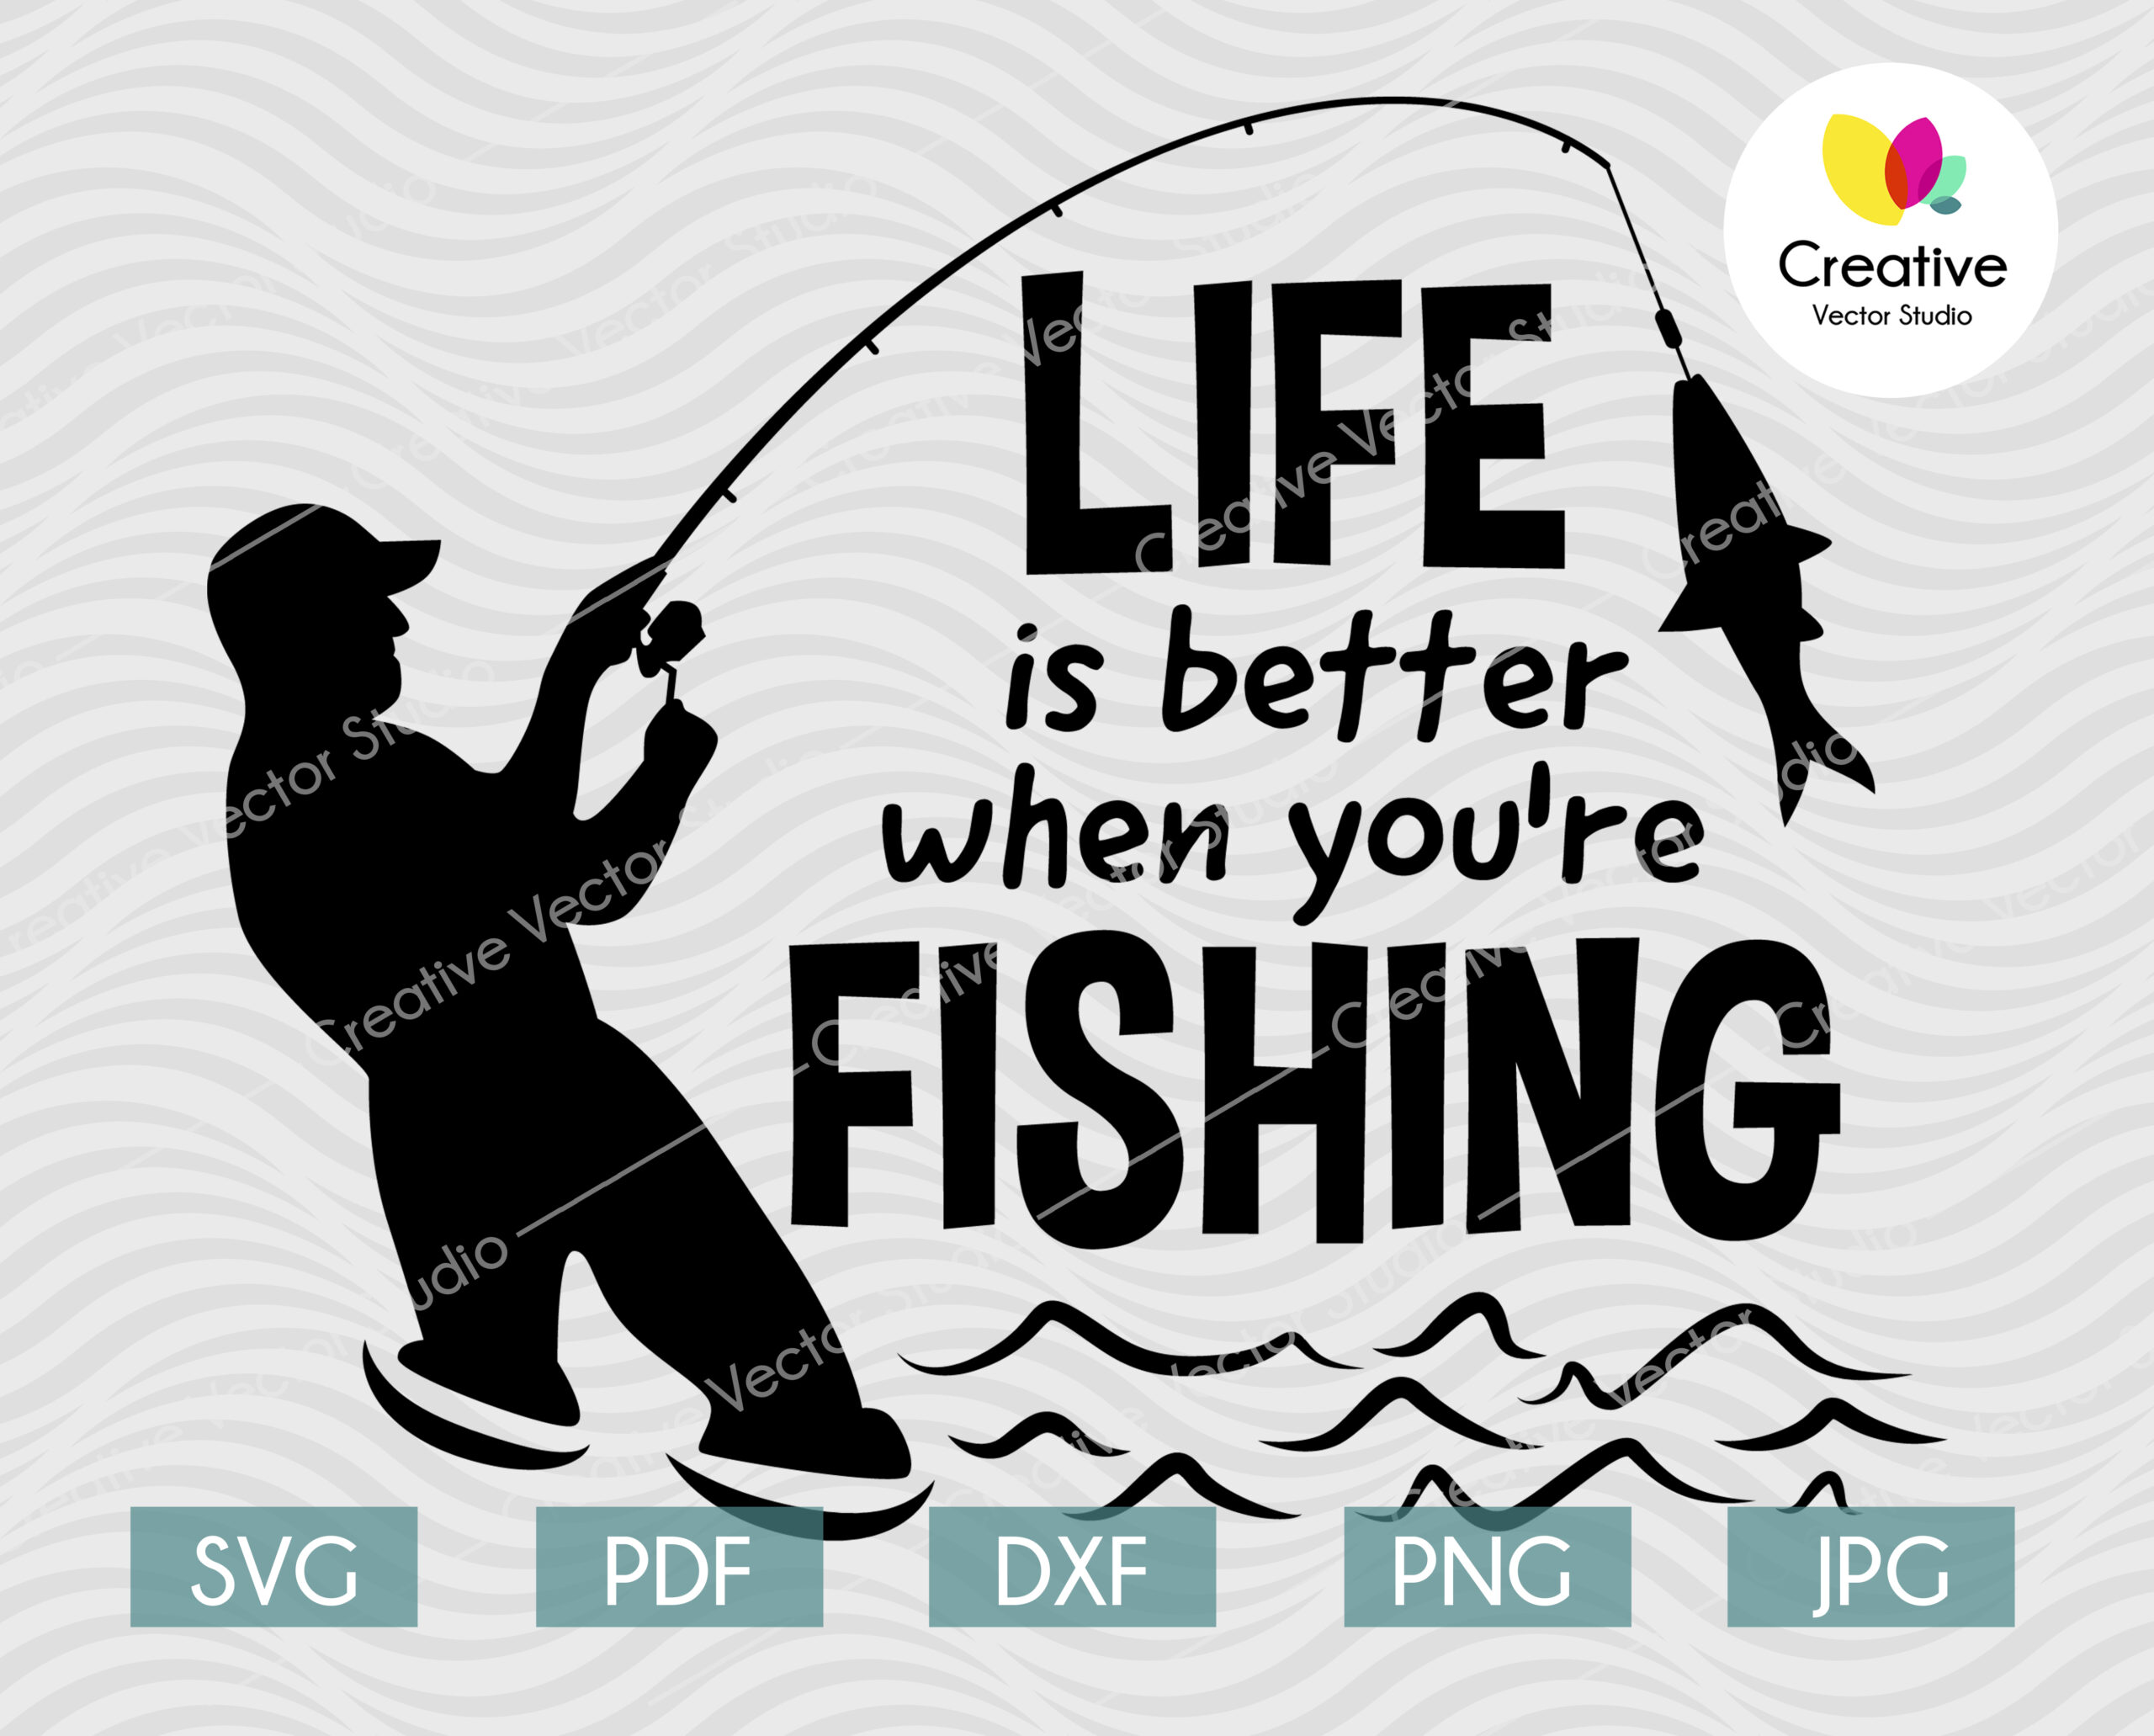 https://creative-vector-studio.com/wp-content/uploads/2020/09/life-is-better-when-you-fishing-svg_941.jpg